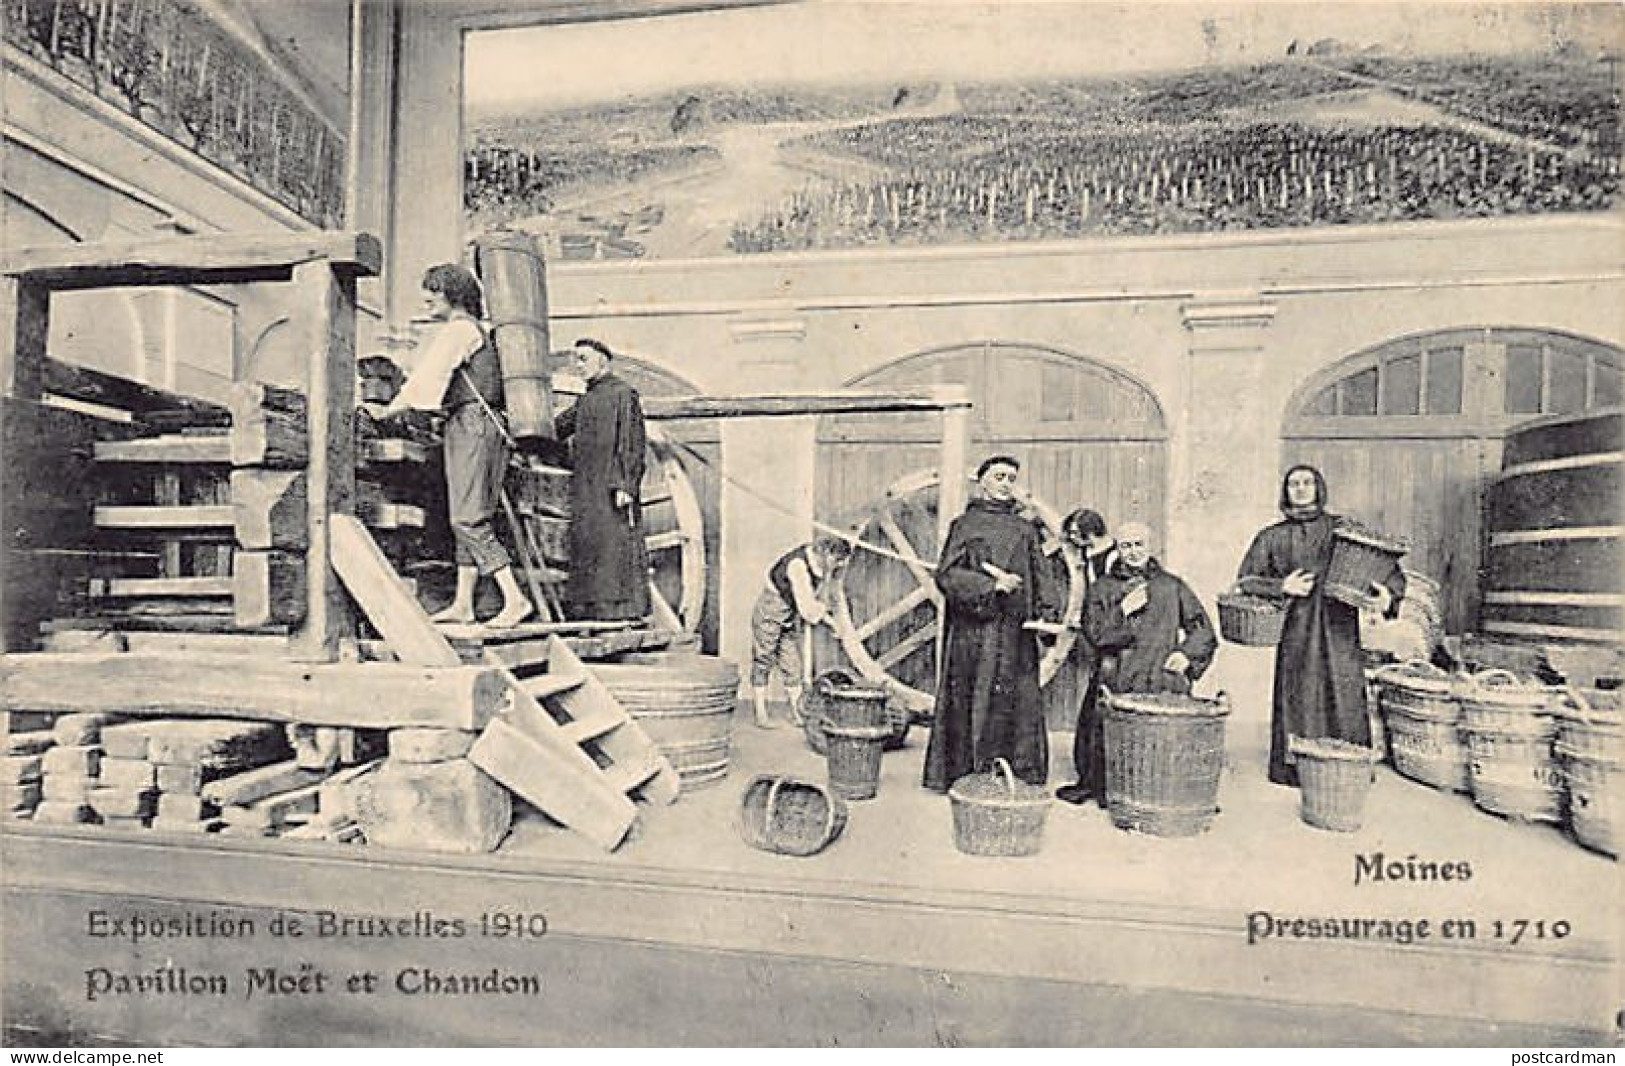 Belgique - Exposition De Bruxelles 1910 - Pavillon Moët Et Chandon - Moines - Pressurage En 1710 - Wereldtentoonstellingen